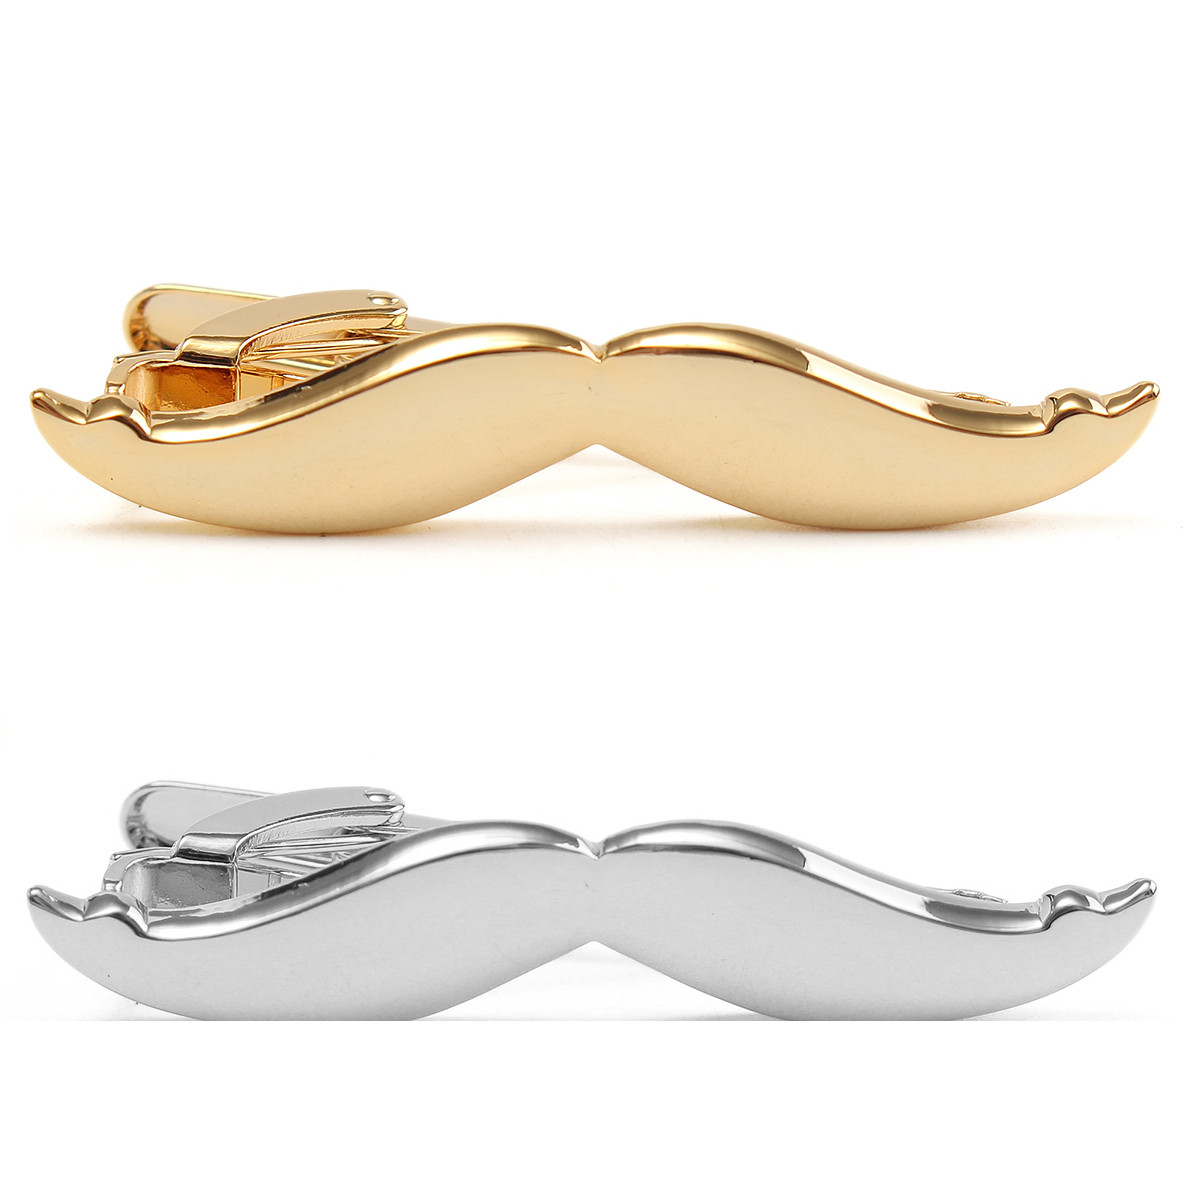 

Men Silver Gold Mustache Shape Tie Clip Stainless Steel Plain Clasp Bars Pins Clips Suit Accessories